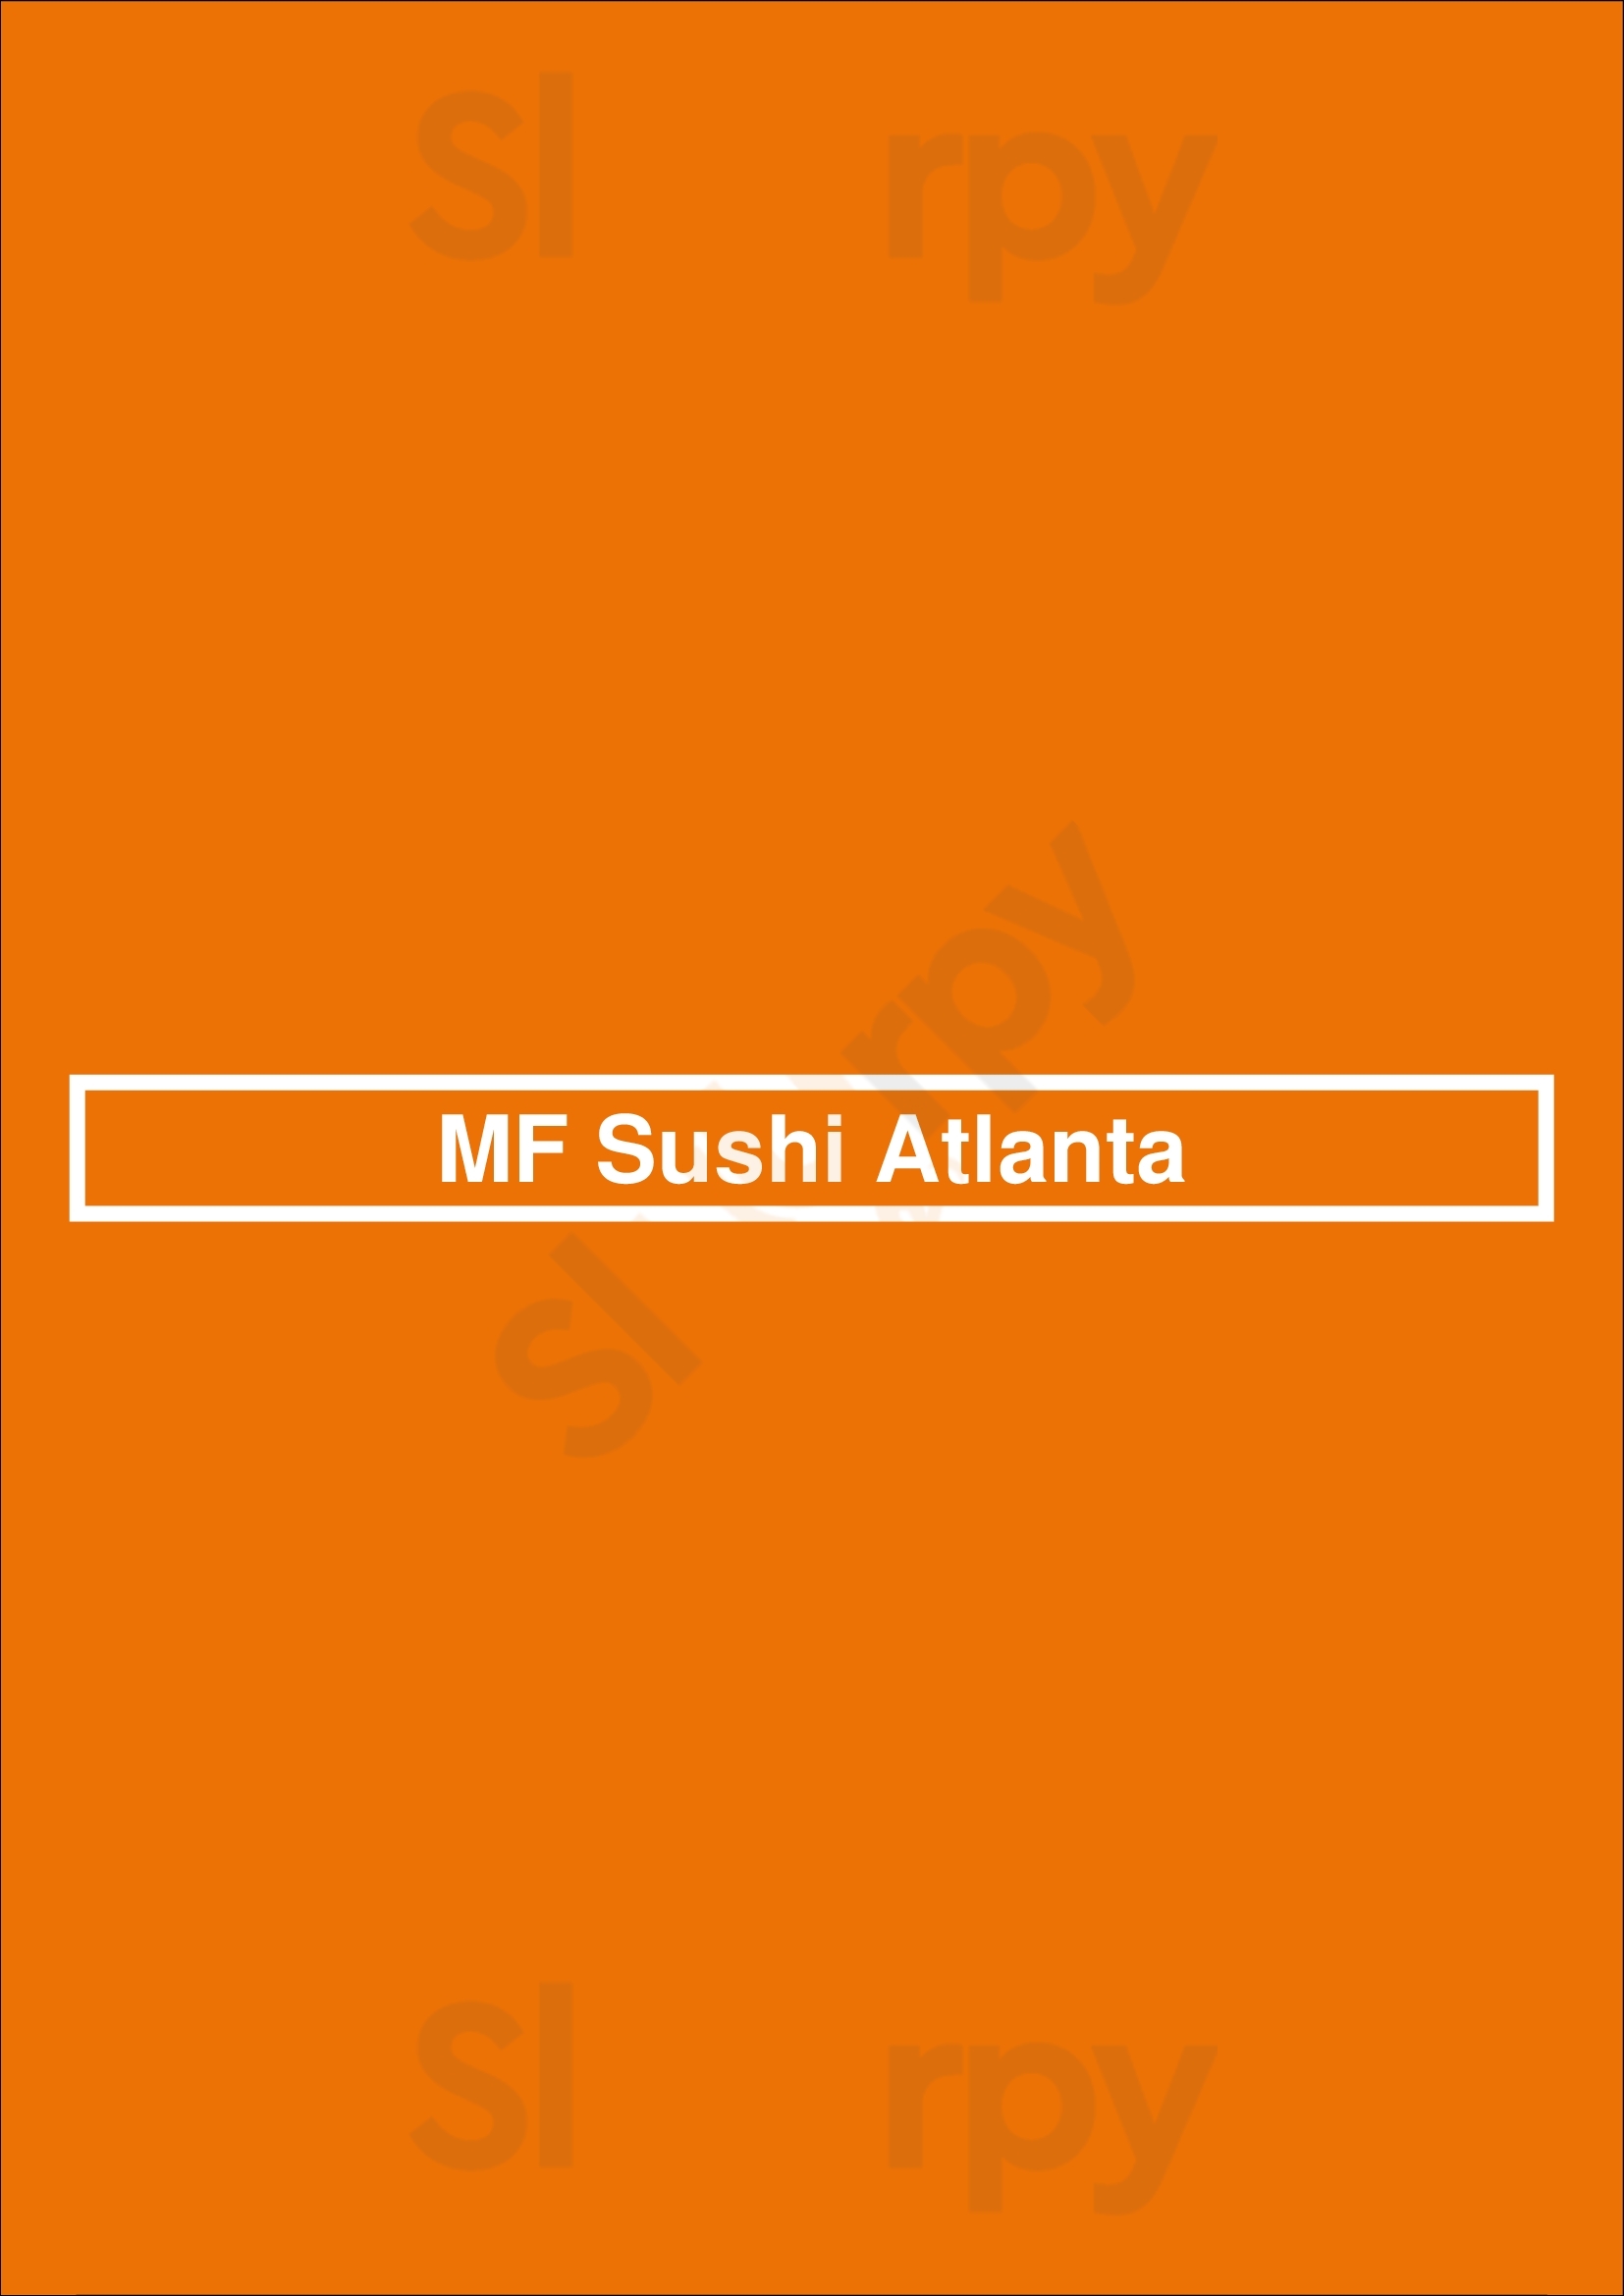 Mf Sushi Atlanta Atlanta Menu - 1